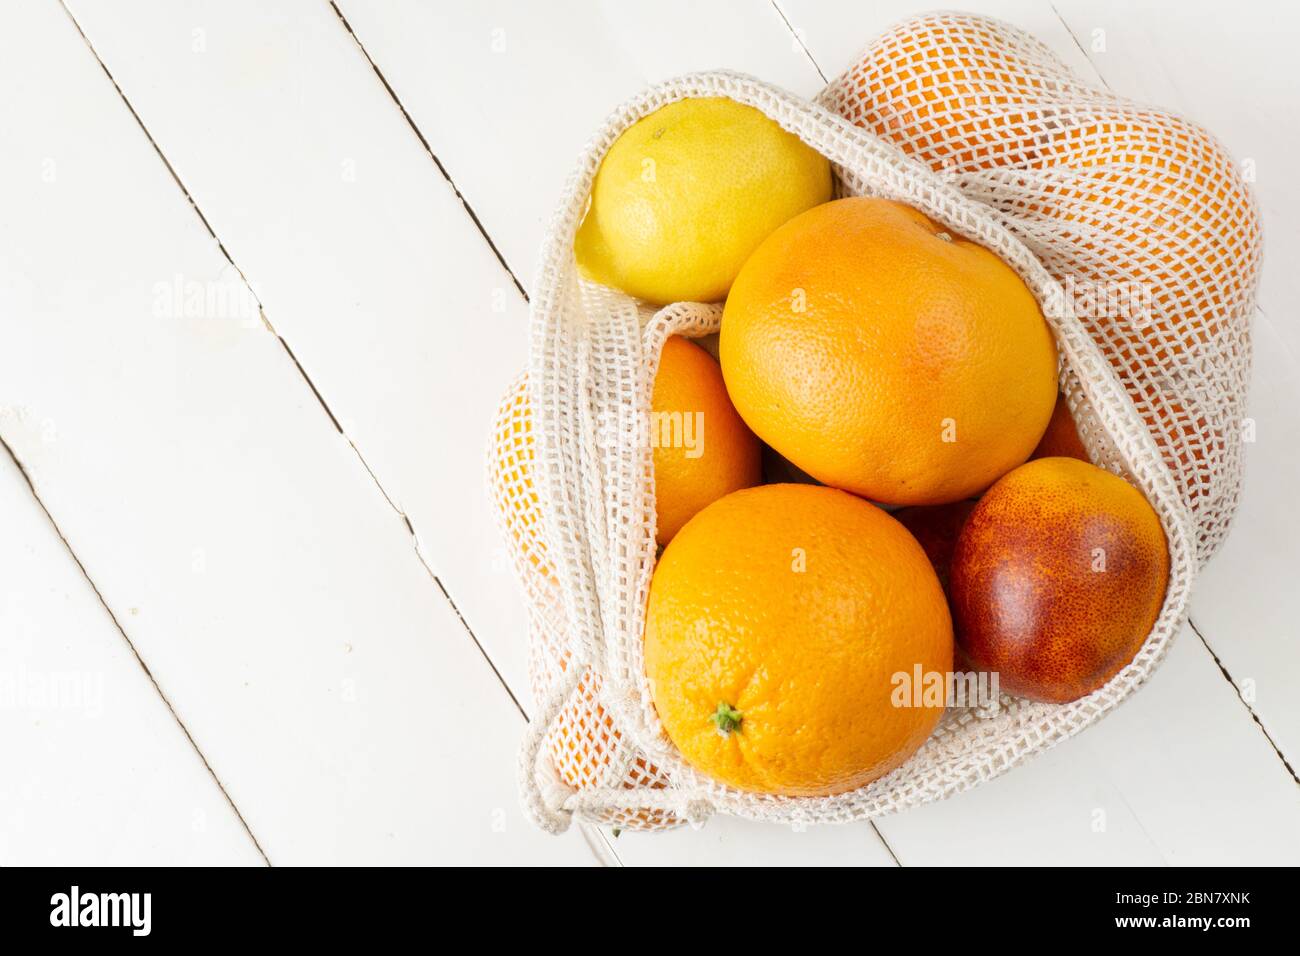 Orange, lemon and grapefruit in eco bag on white wooden background. Citrus fruit. Zero waste, eco friendly or plastic free lifestyle concept. Copy space, vertical. Stock Photo